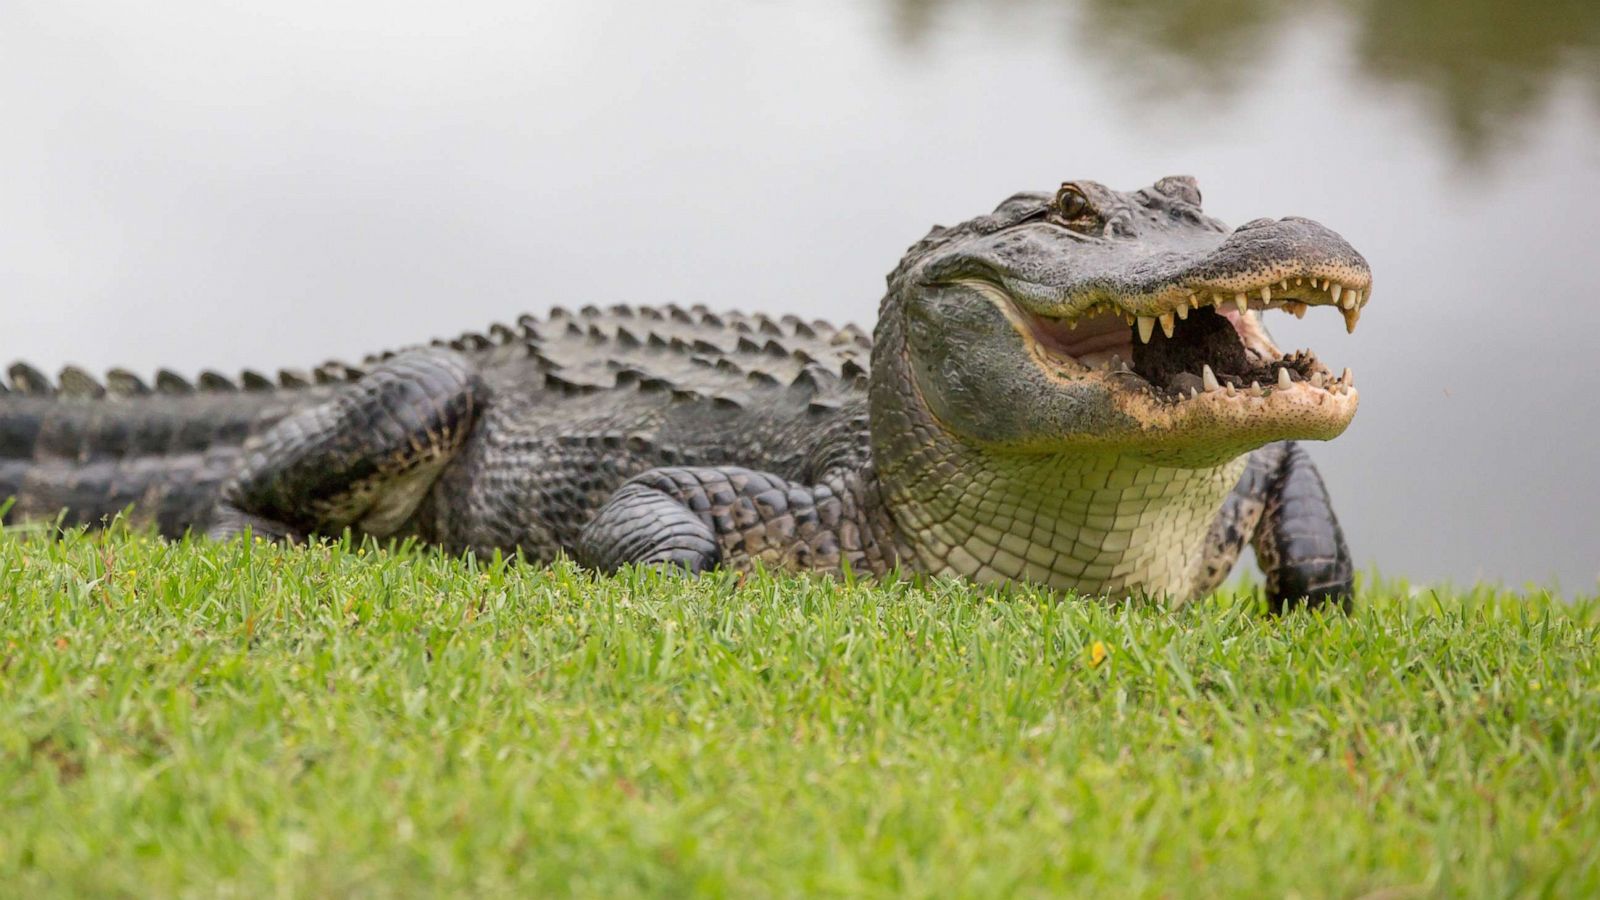 Alligator Encounter: Woman’s Close Call With A Gator In South Carolina Neighborhood